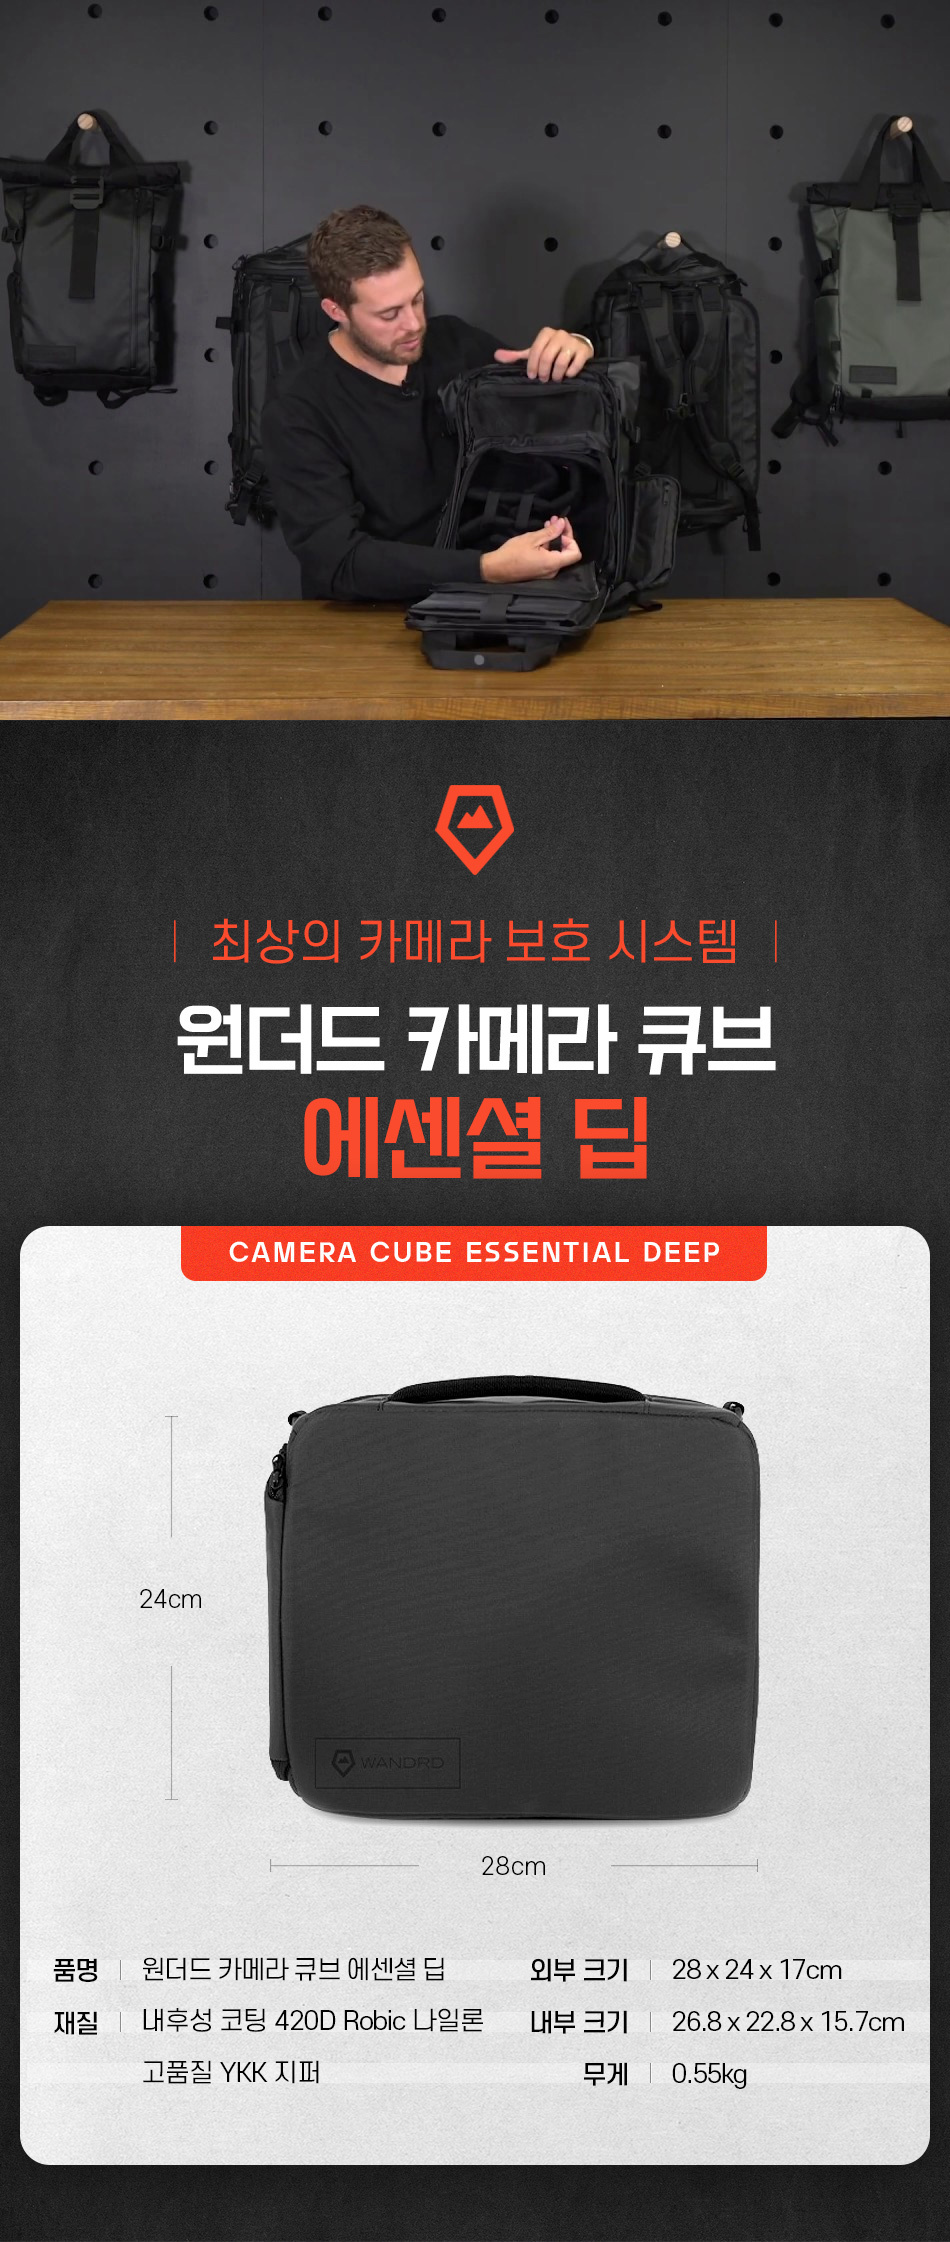 cube_essential_deep_01.jpg